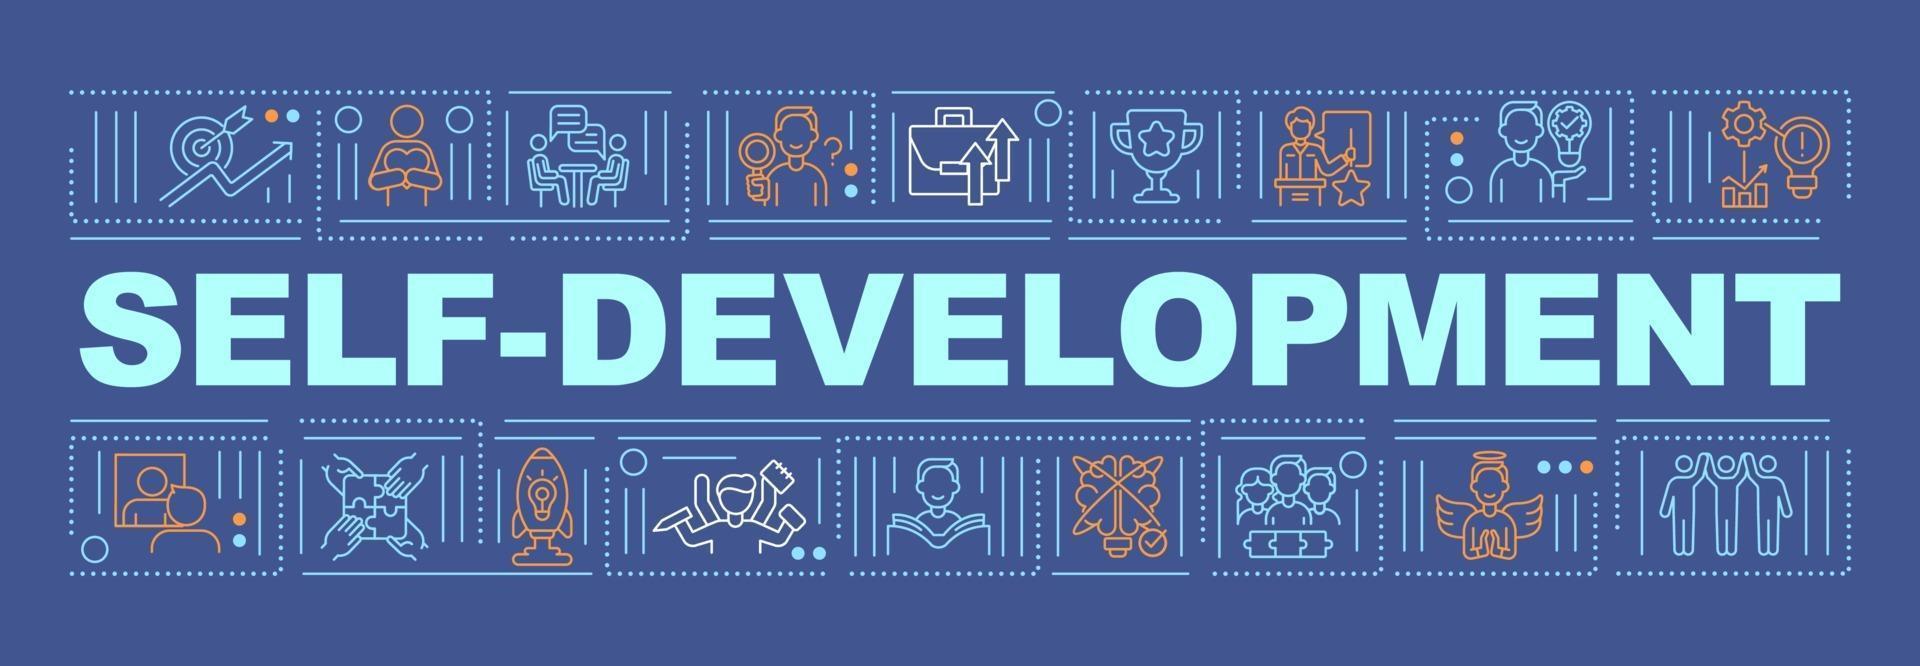 Self-development word concepts banner vector